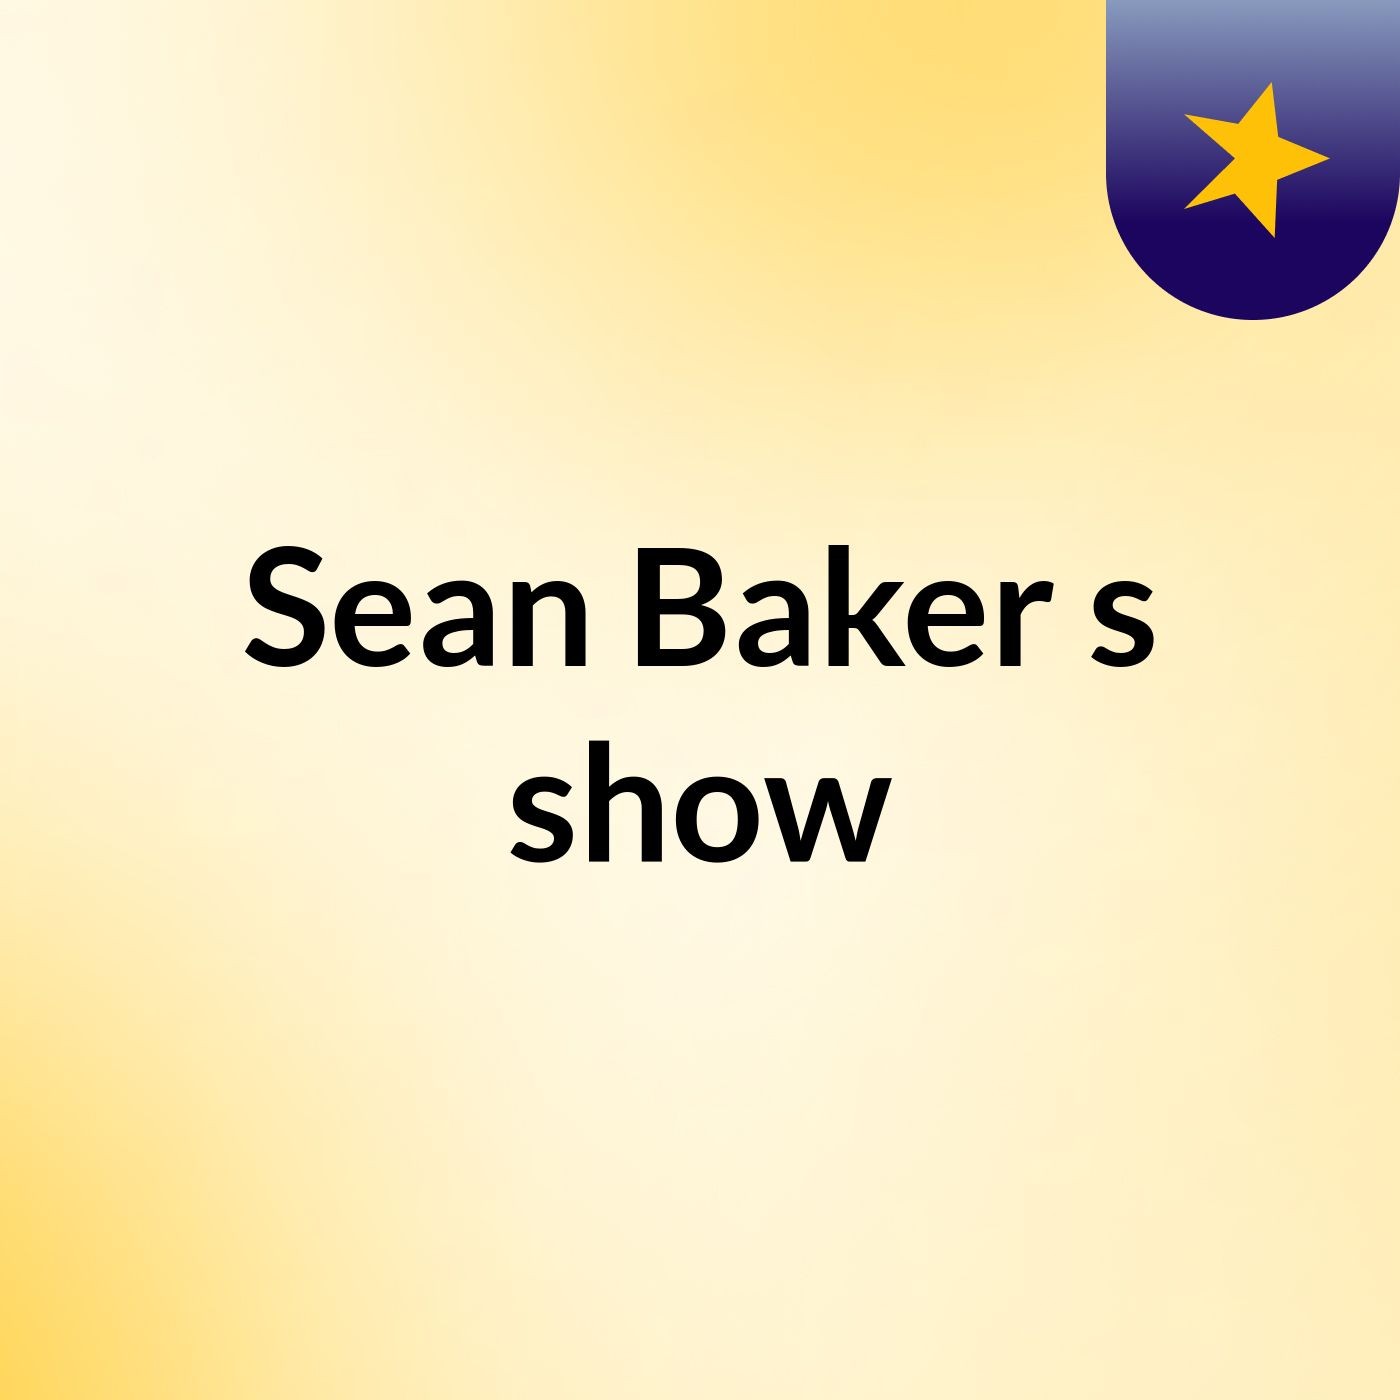 Sean Baker's show